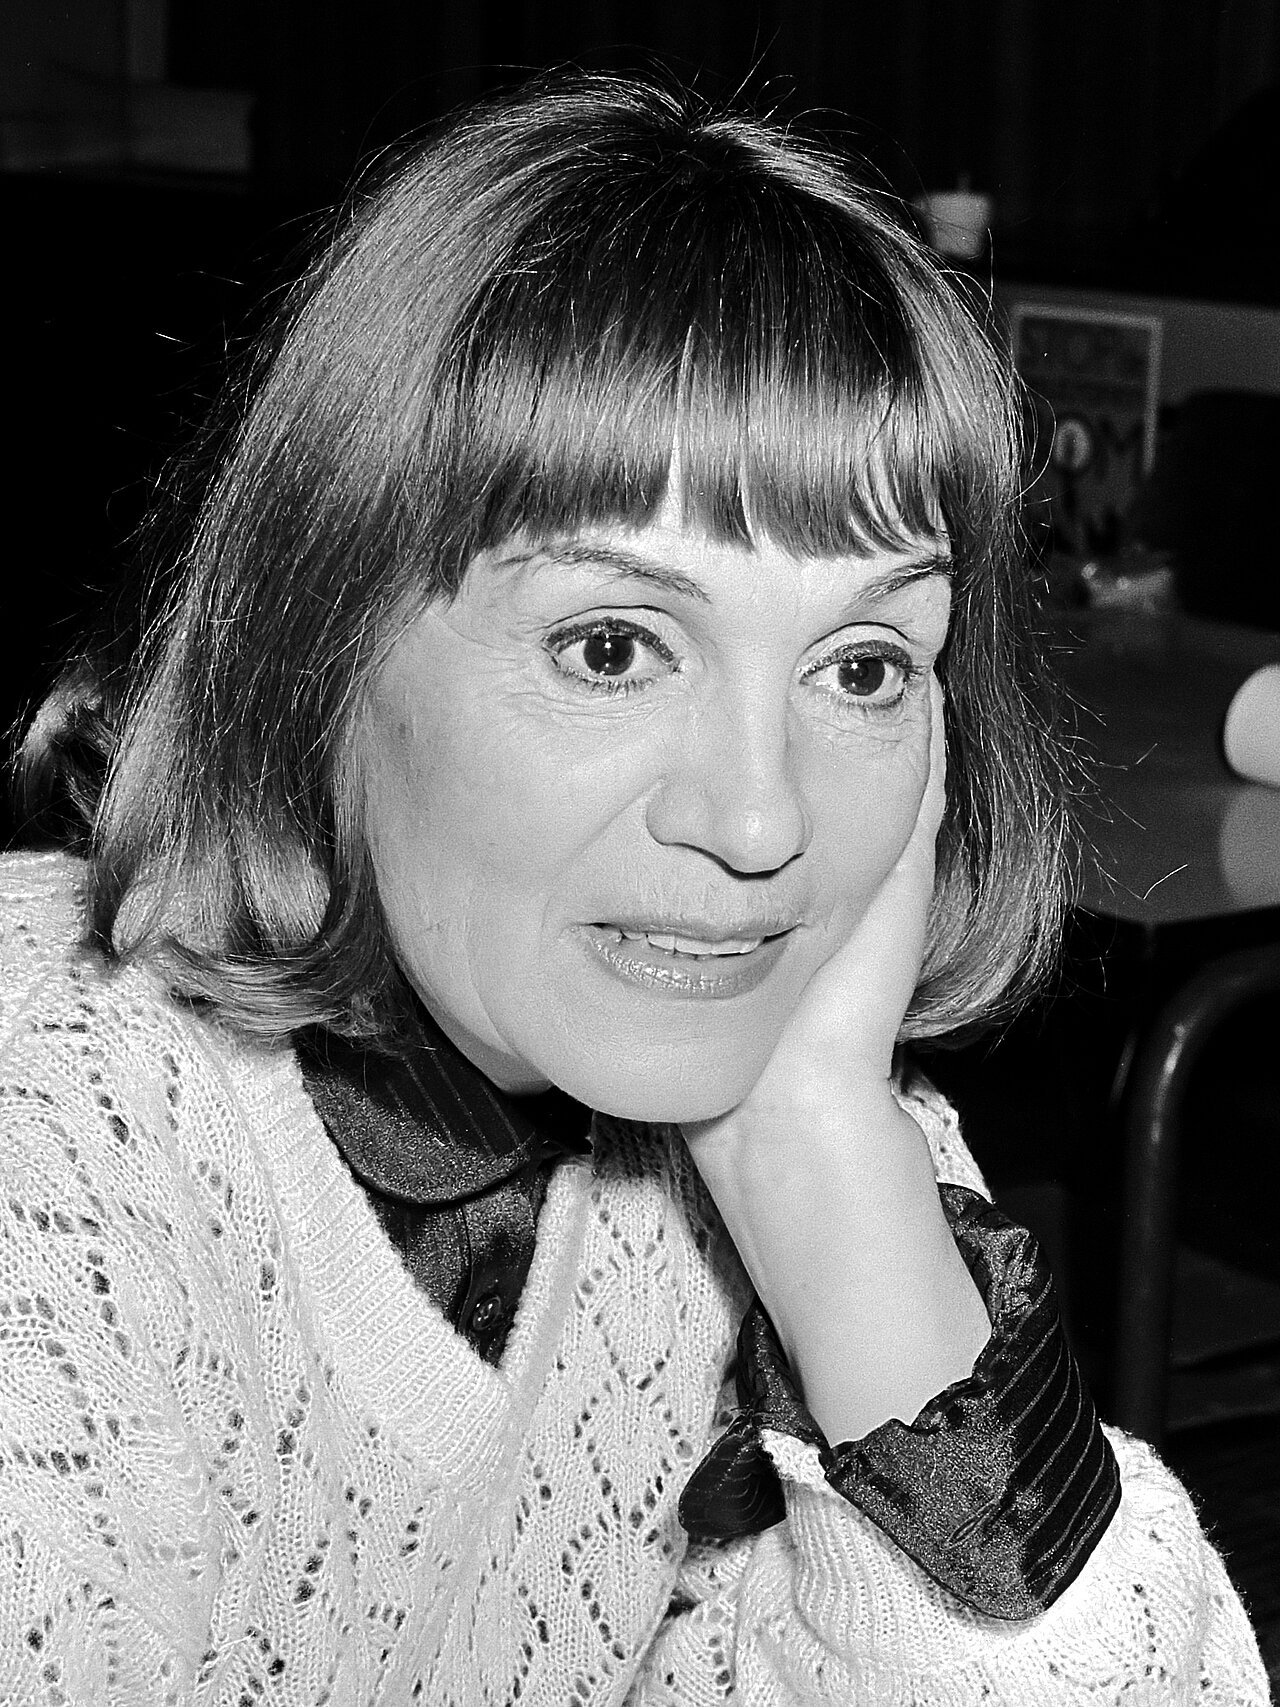 Gisela May; Foto: Hans van Dijk for Anefo, CC BY-SA 3.0, via Wikimedia Commons https://upload.wikimedia.org/wikipedia/commons/2/2a/Gisela_May_%281979%29.jpg